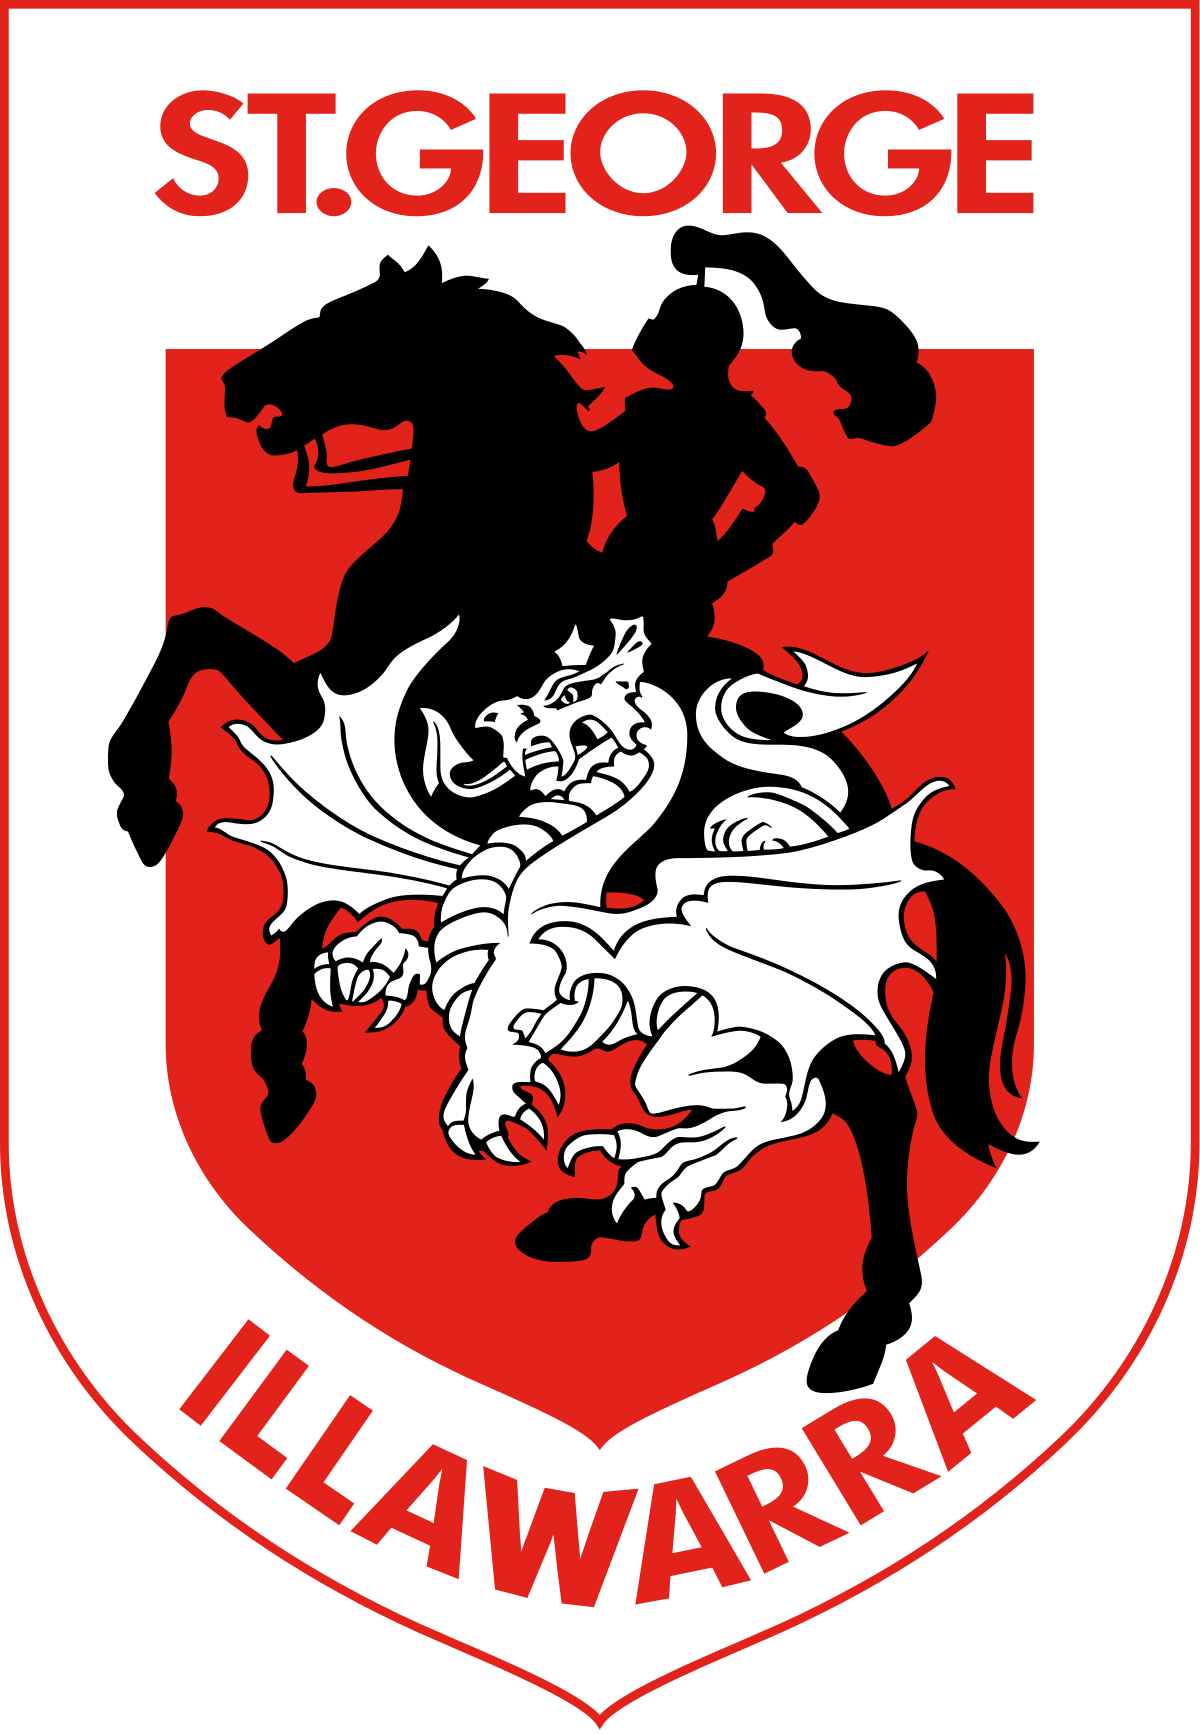 White and Red V Logo - St. George Illawarra Dragons